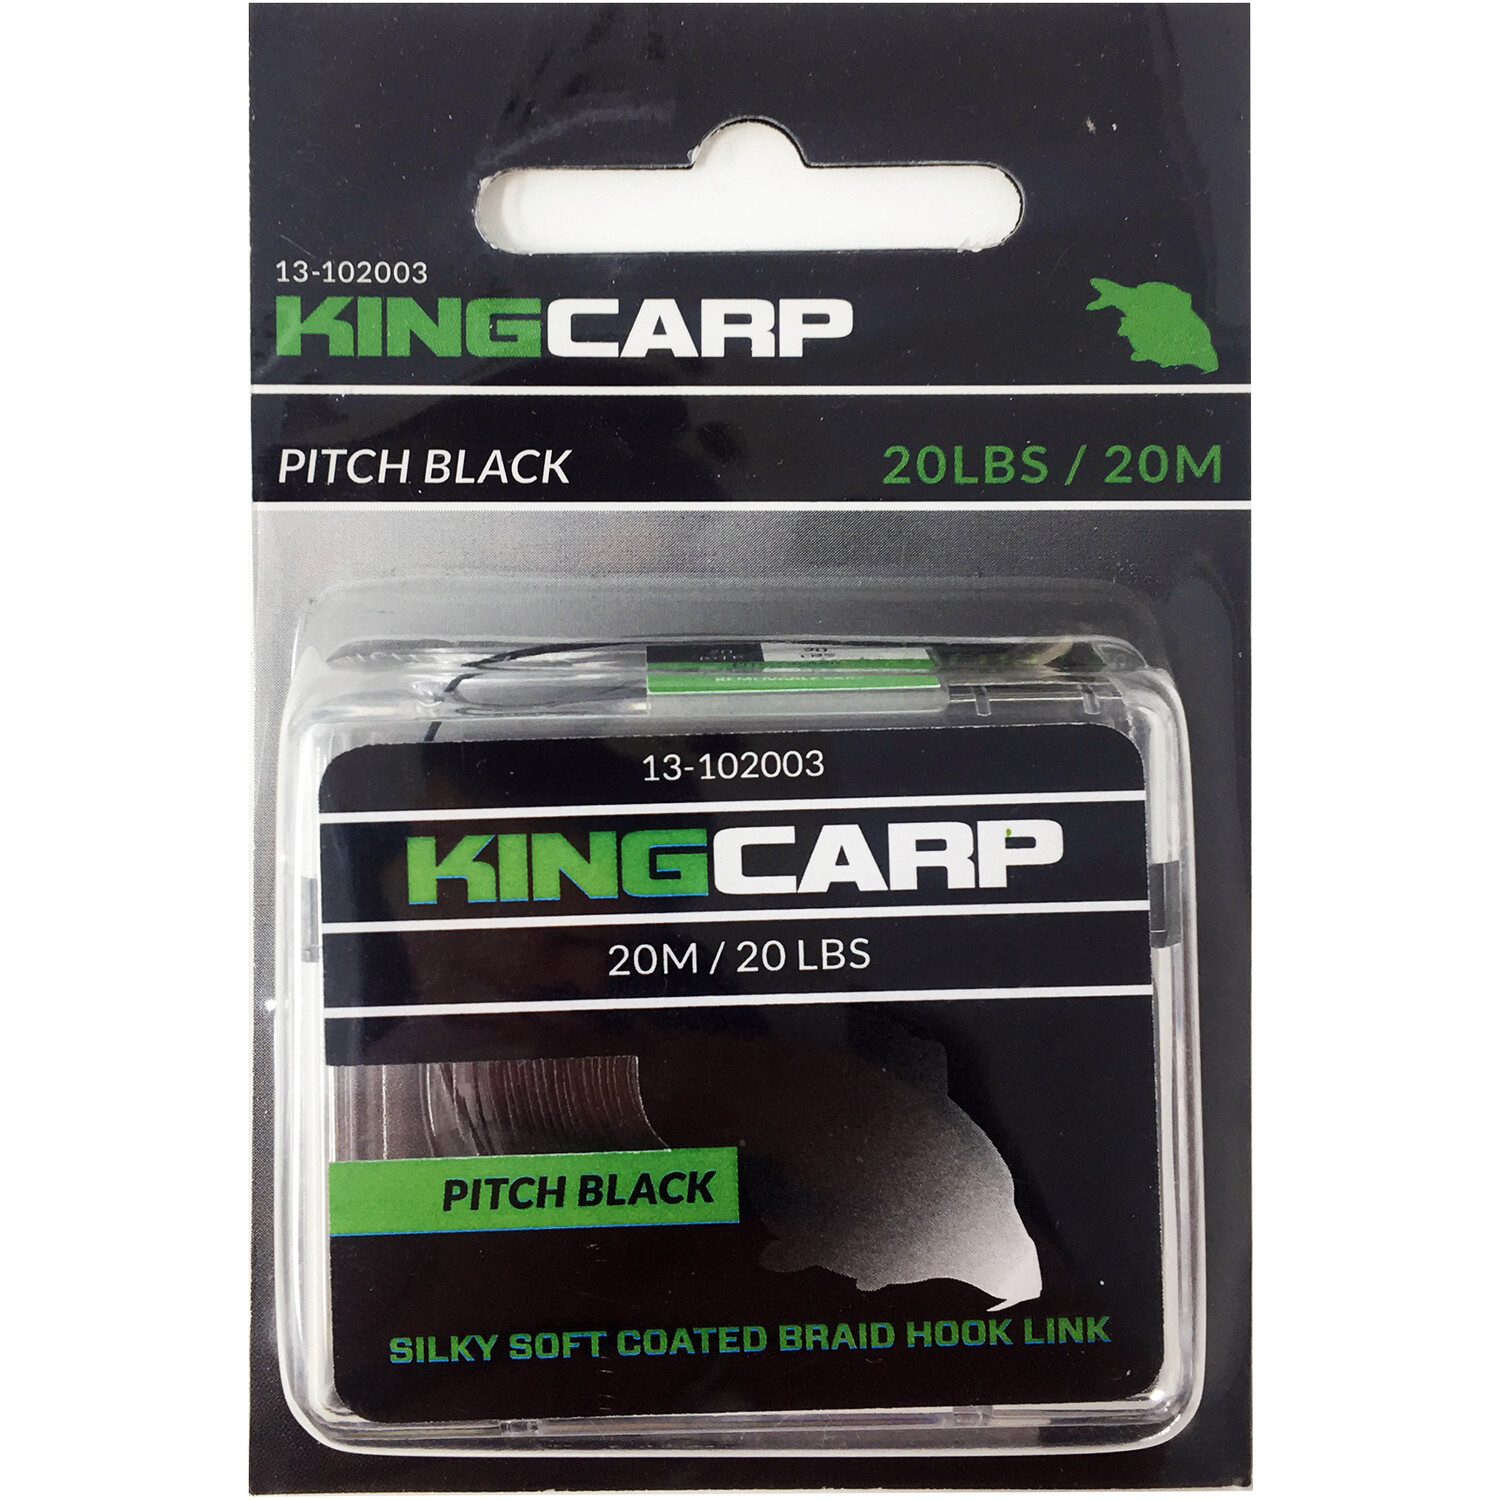 Pitch Black King Carp Coated Braid Hook Link Image 2